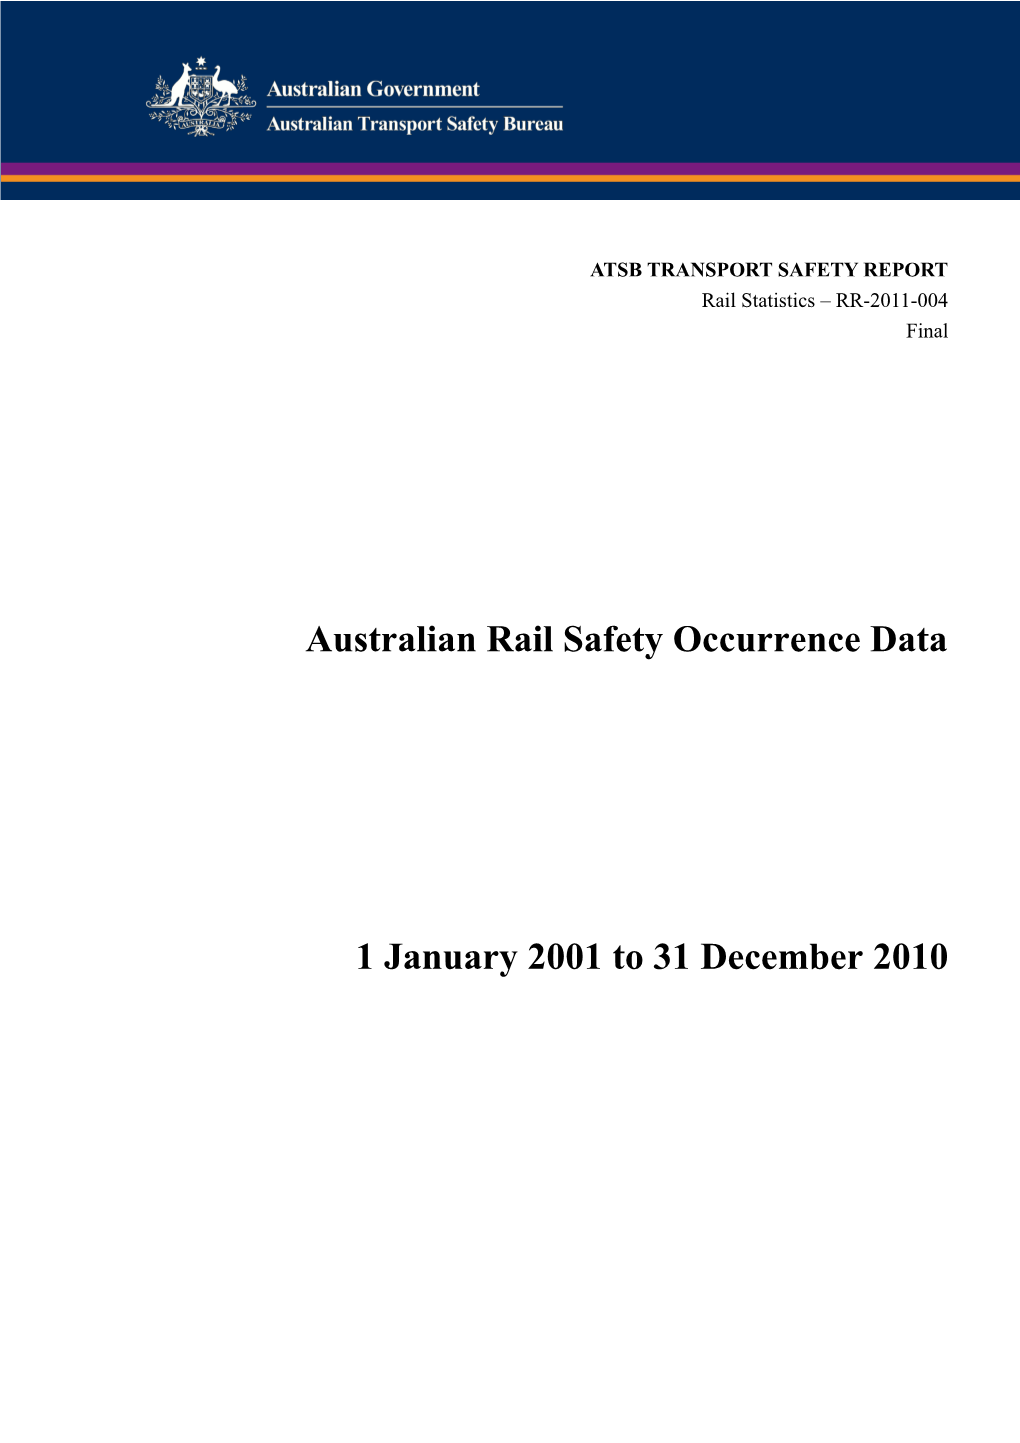 Australian Rail Safety Occurrence Data